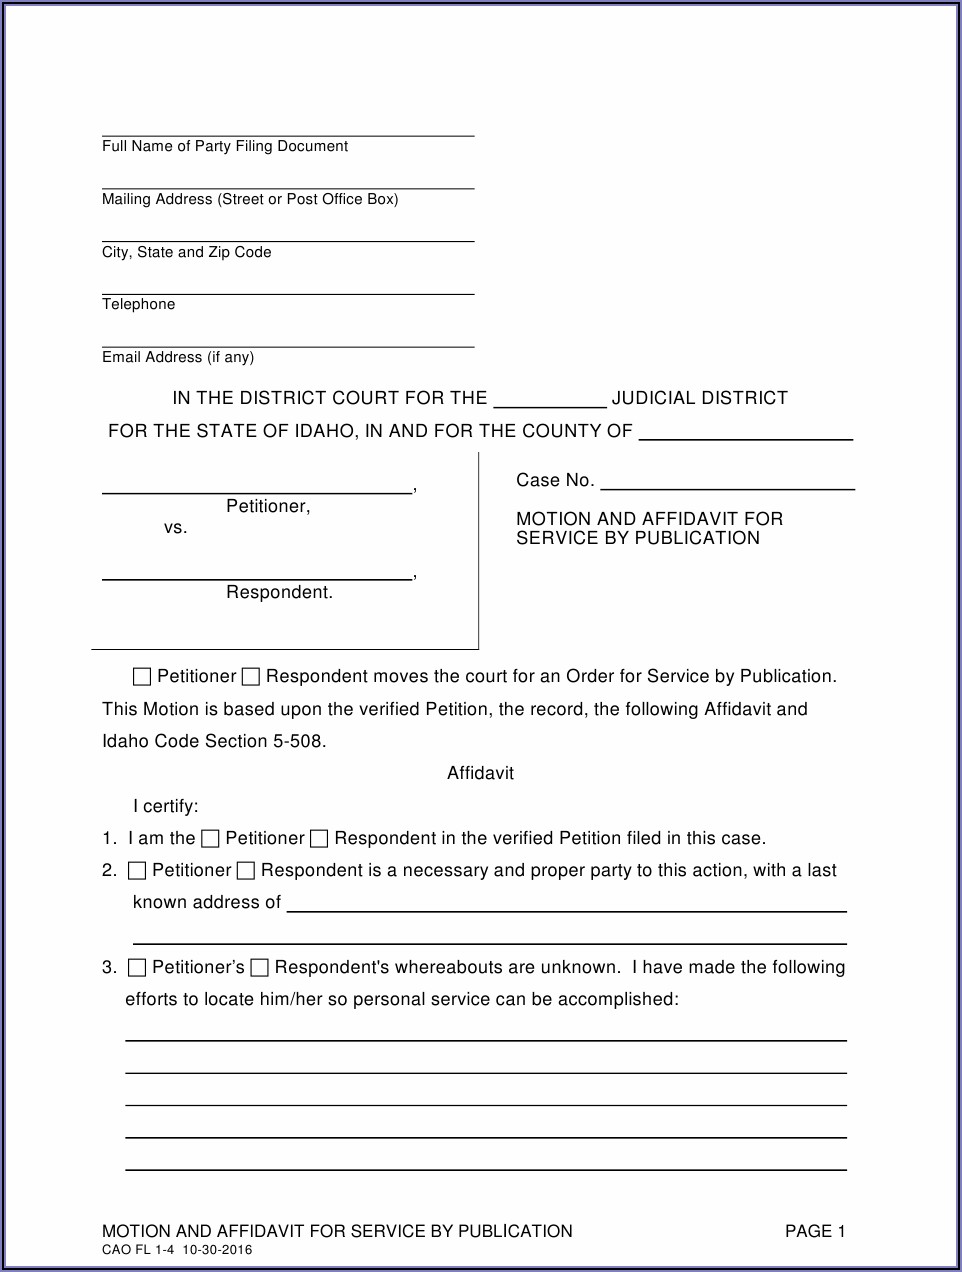 printable-affidavit-form-form-resume-examples-ajydxbzmyl